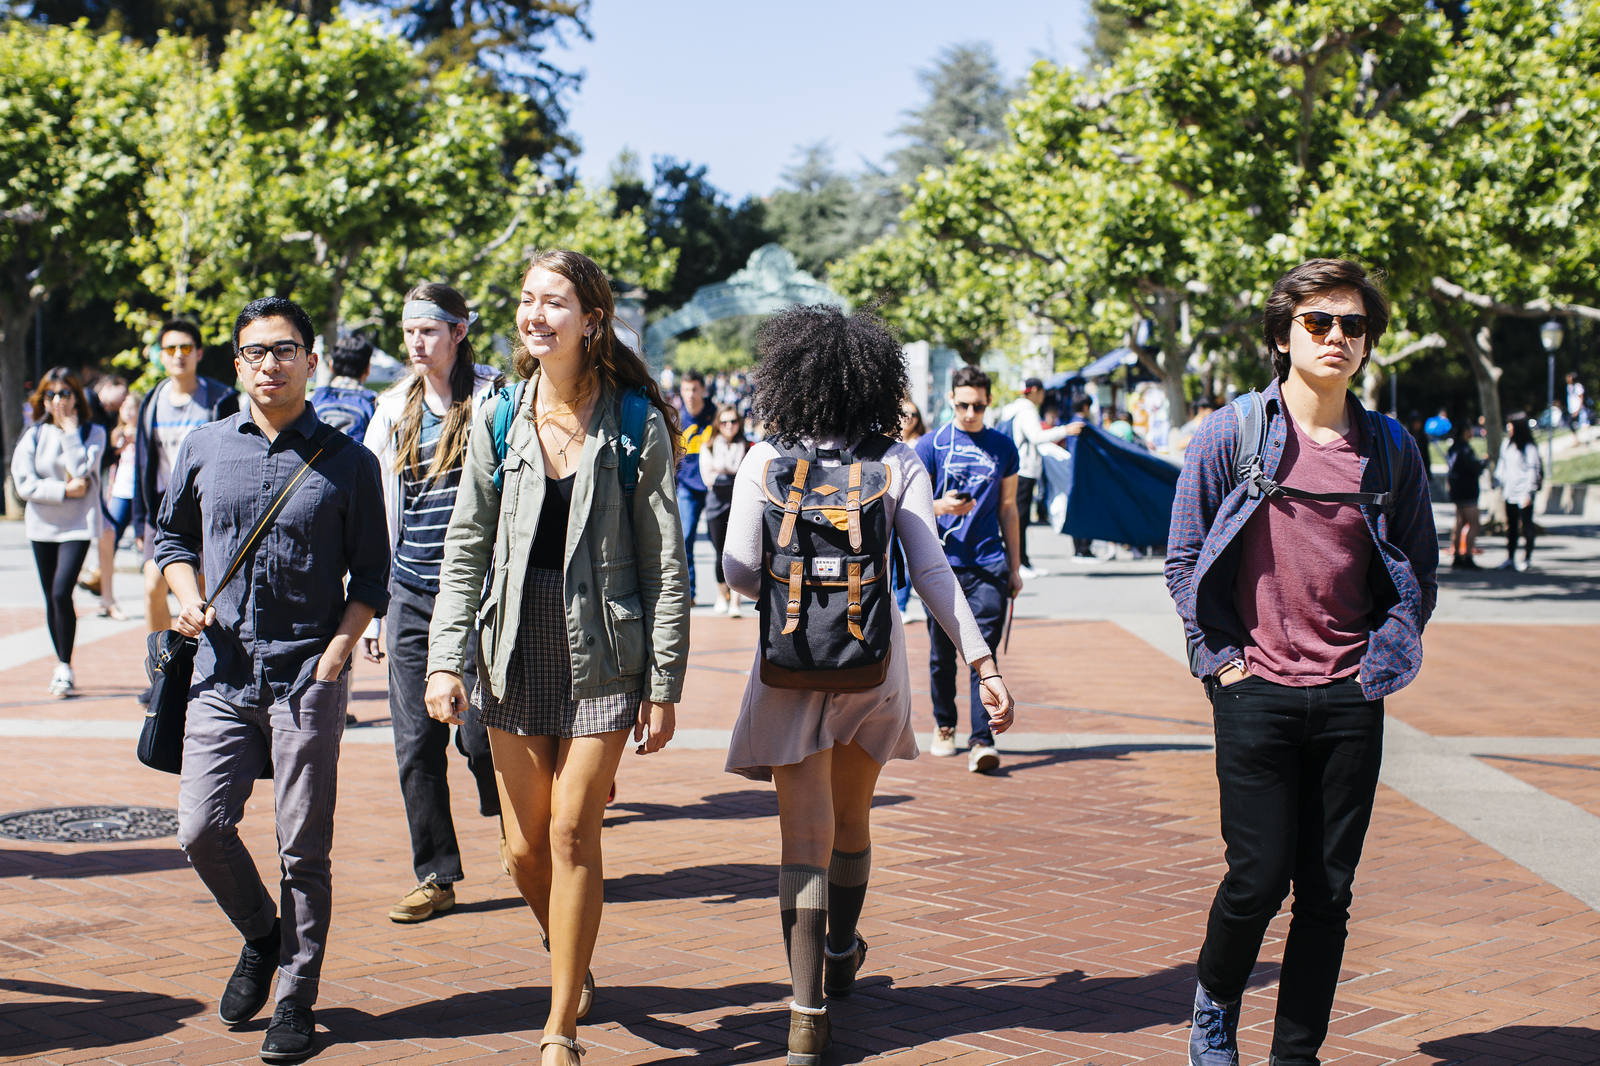 UC students, ©2014 University of California